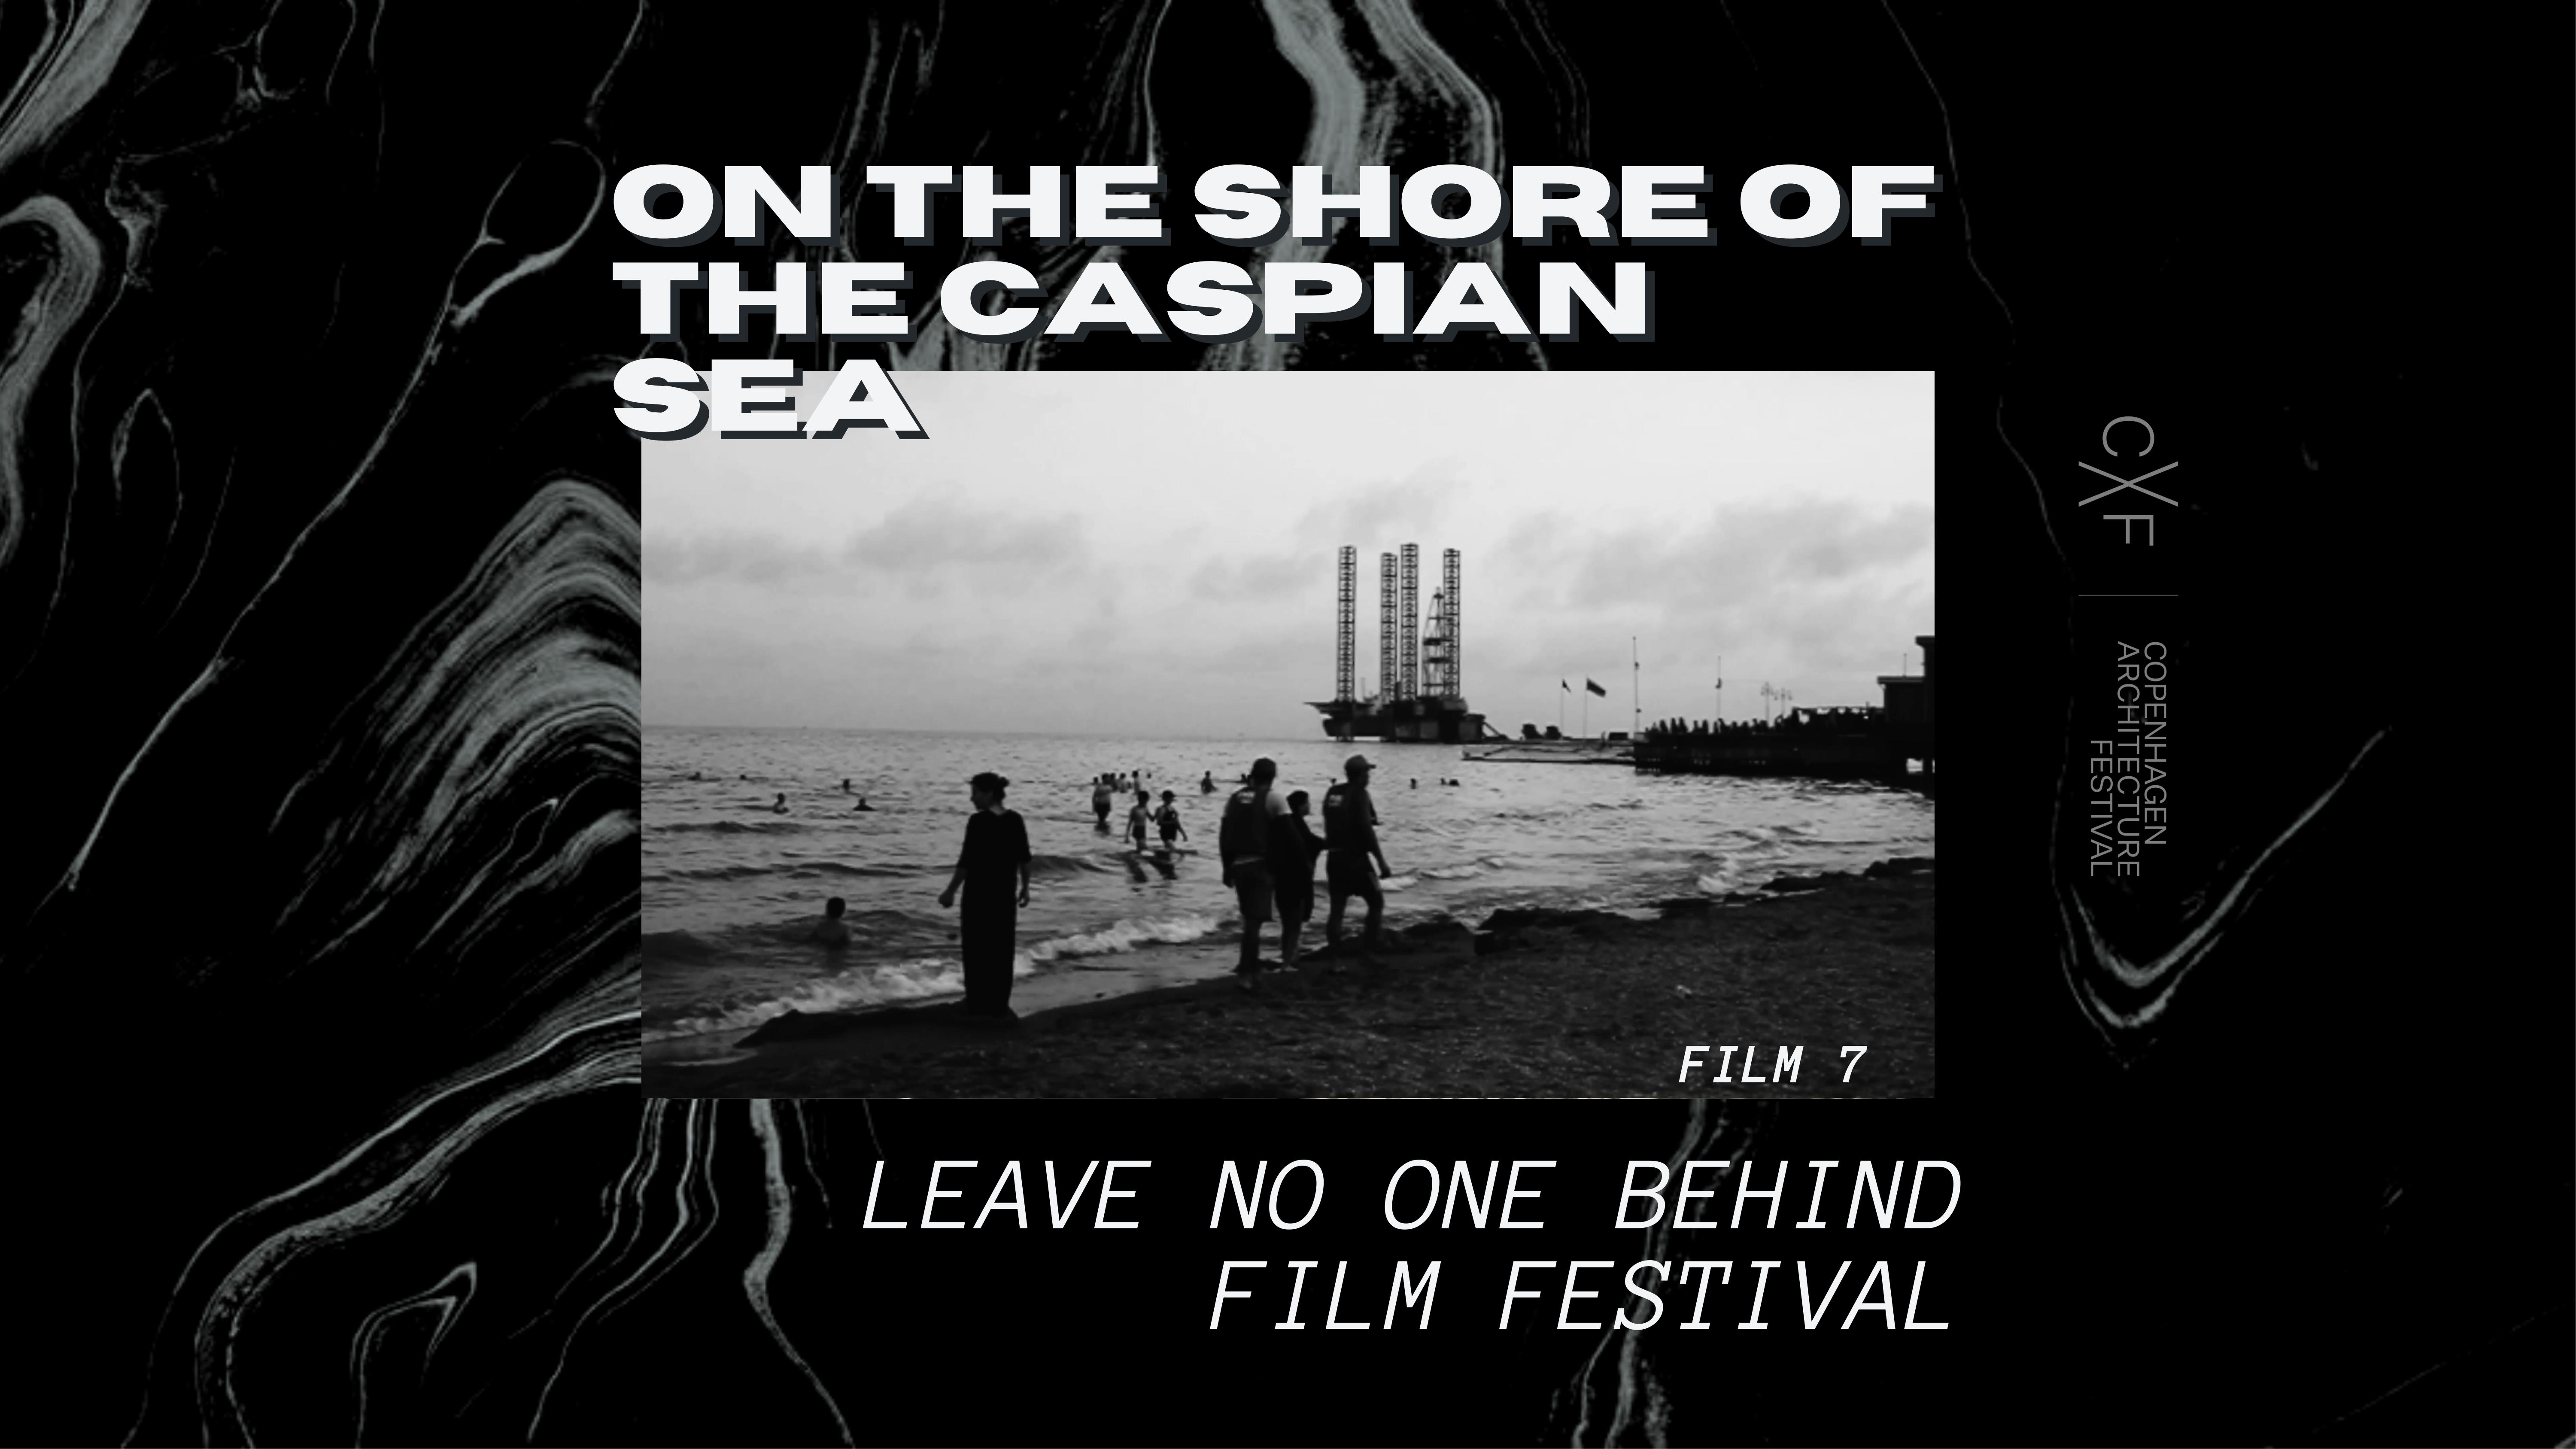 LNOB Film 7: “On the shore of the Caspian Sea”